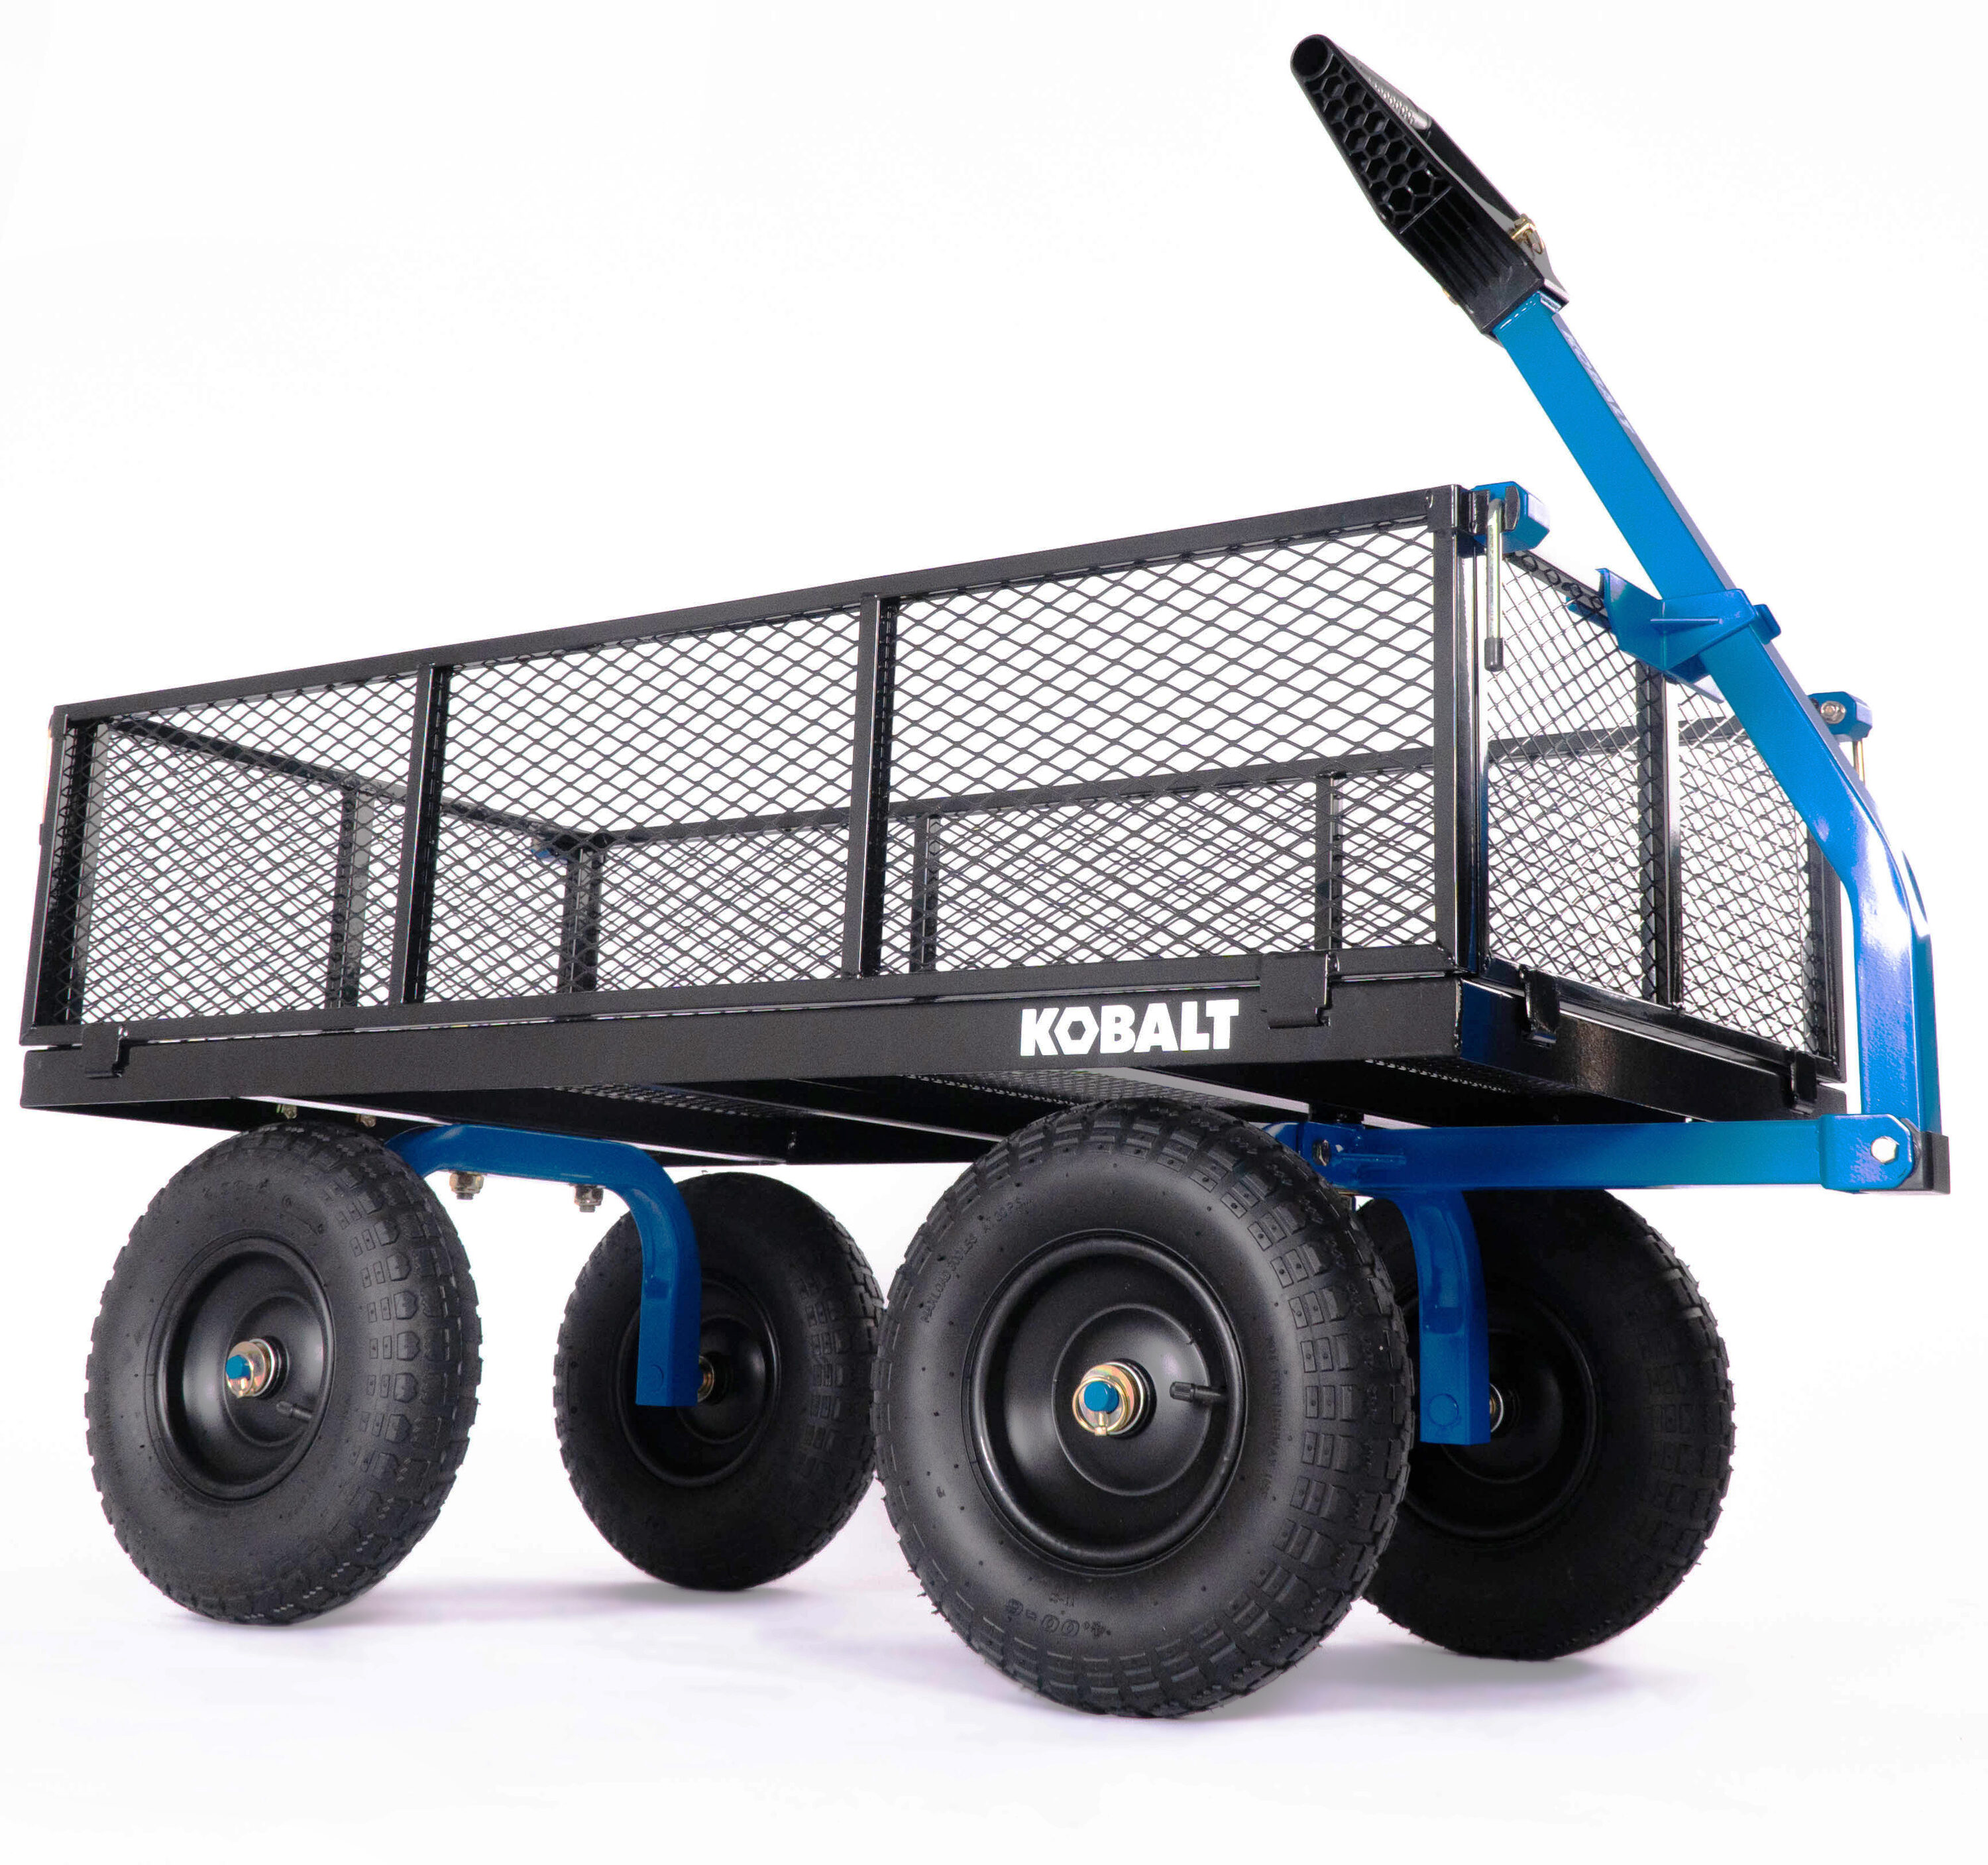 Multi-Functional Beach Fishing Cart - China Utility Cart, Folding Wagon